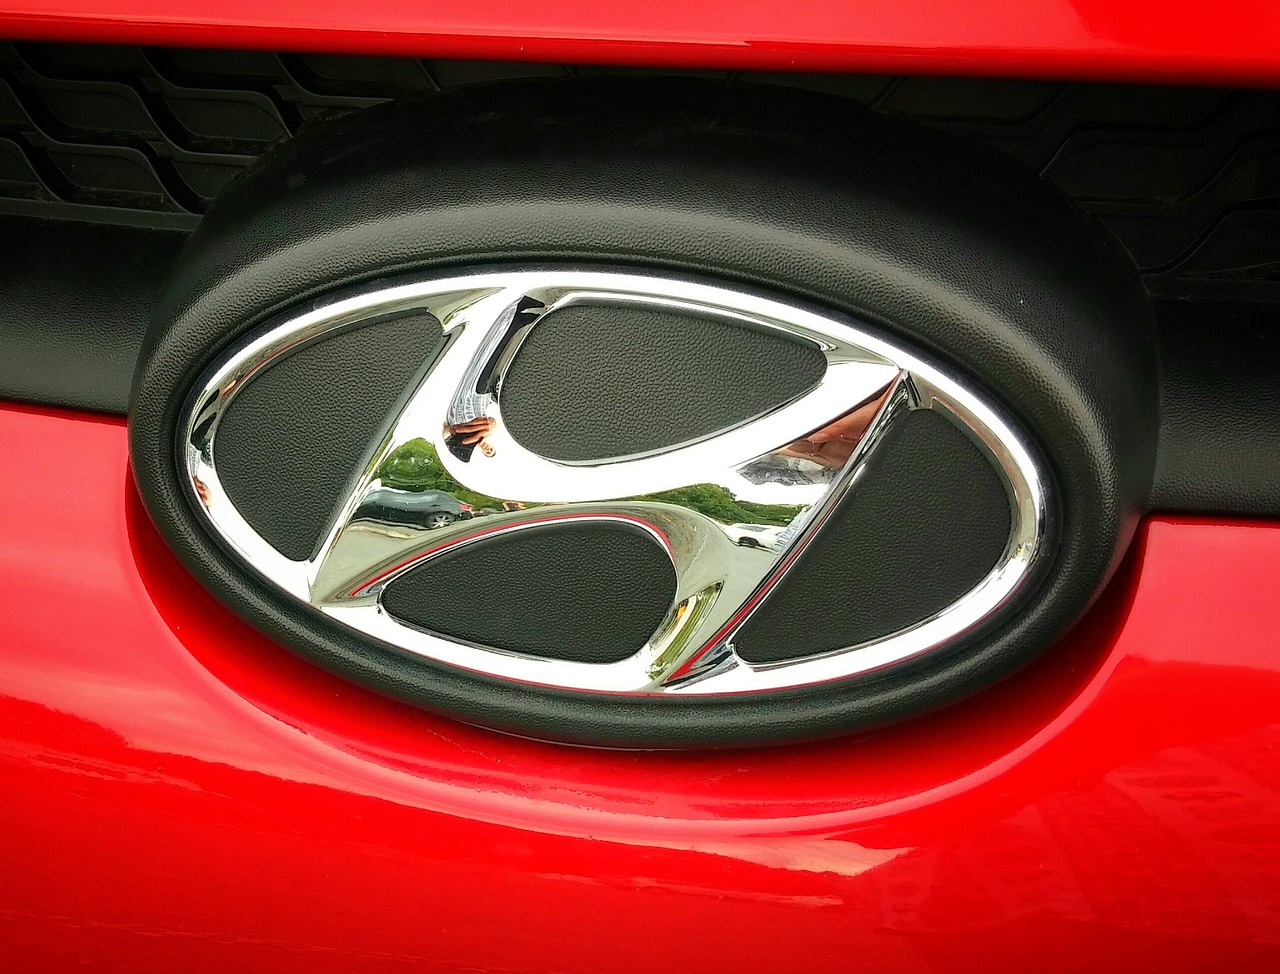 A Hyundai logo on a red vehicle